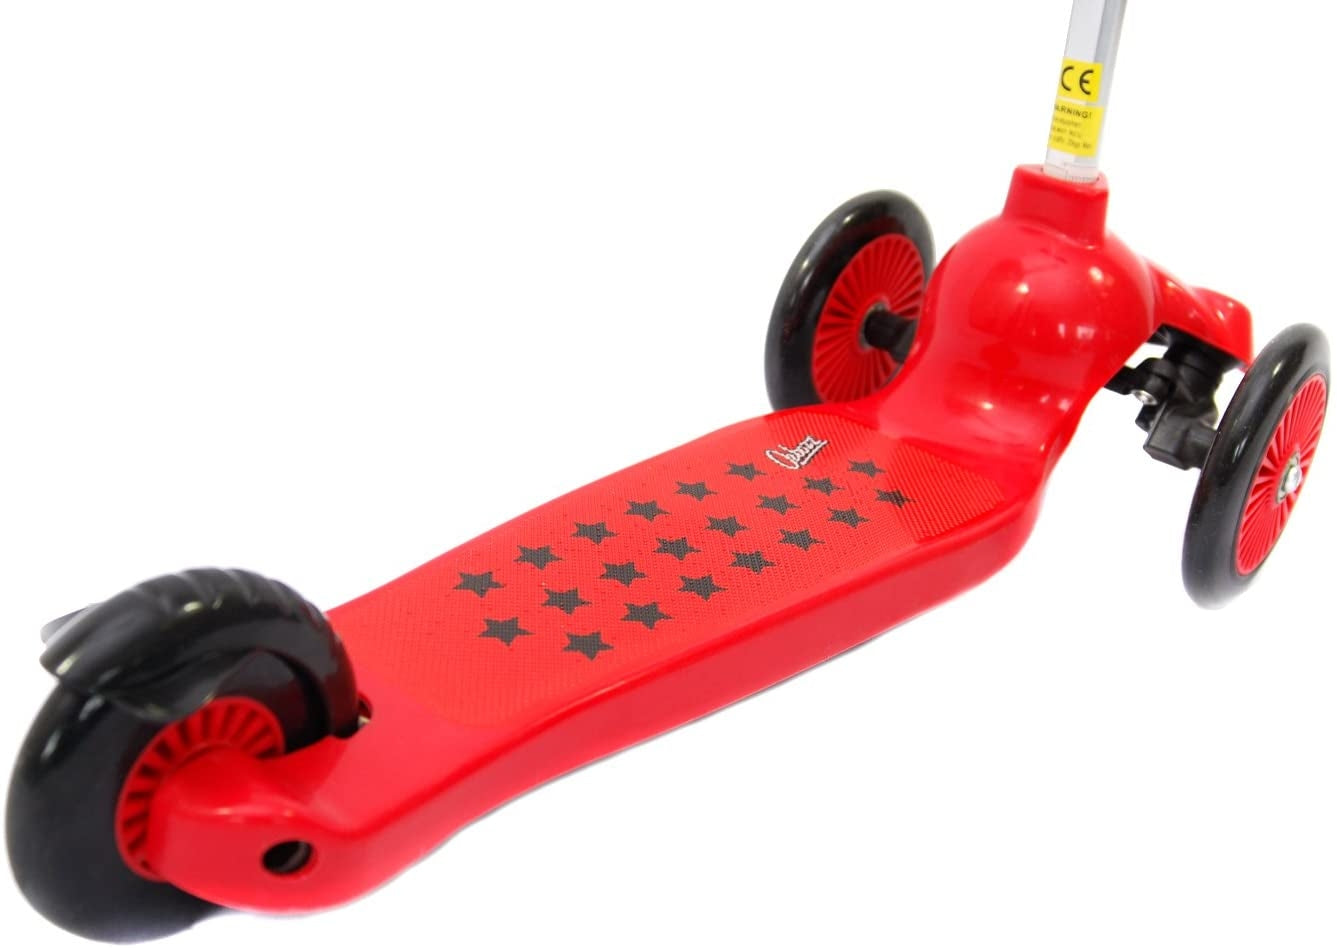 Ozbozz Trail Twist V3 Kids Tri-Scooter - Red - Deck